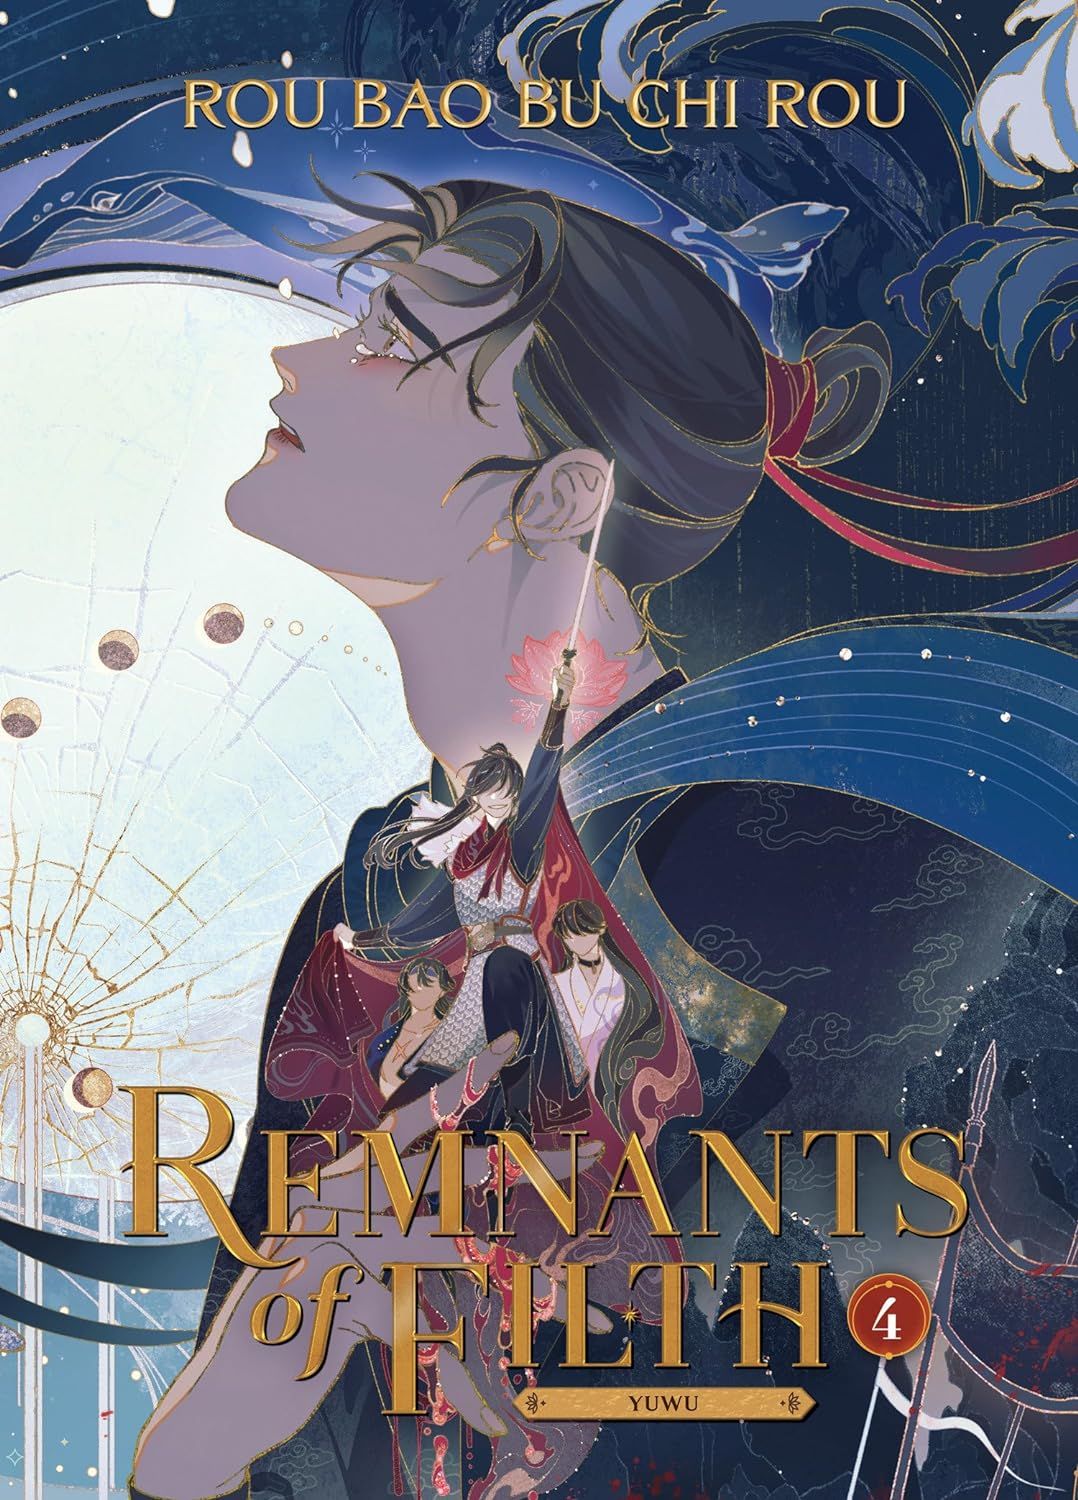 Remnants of Filth: Yuwu (novel) volume 4 cover